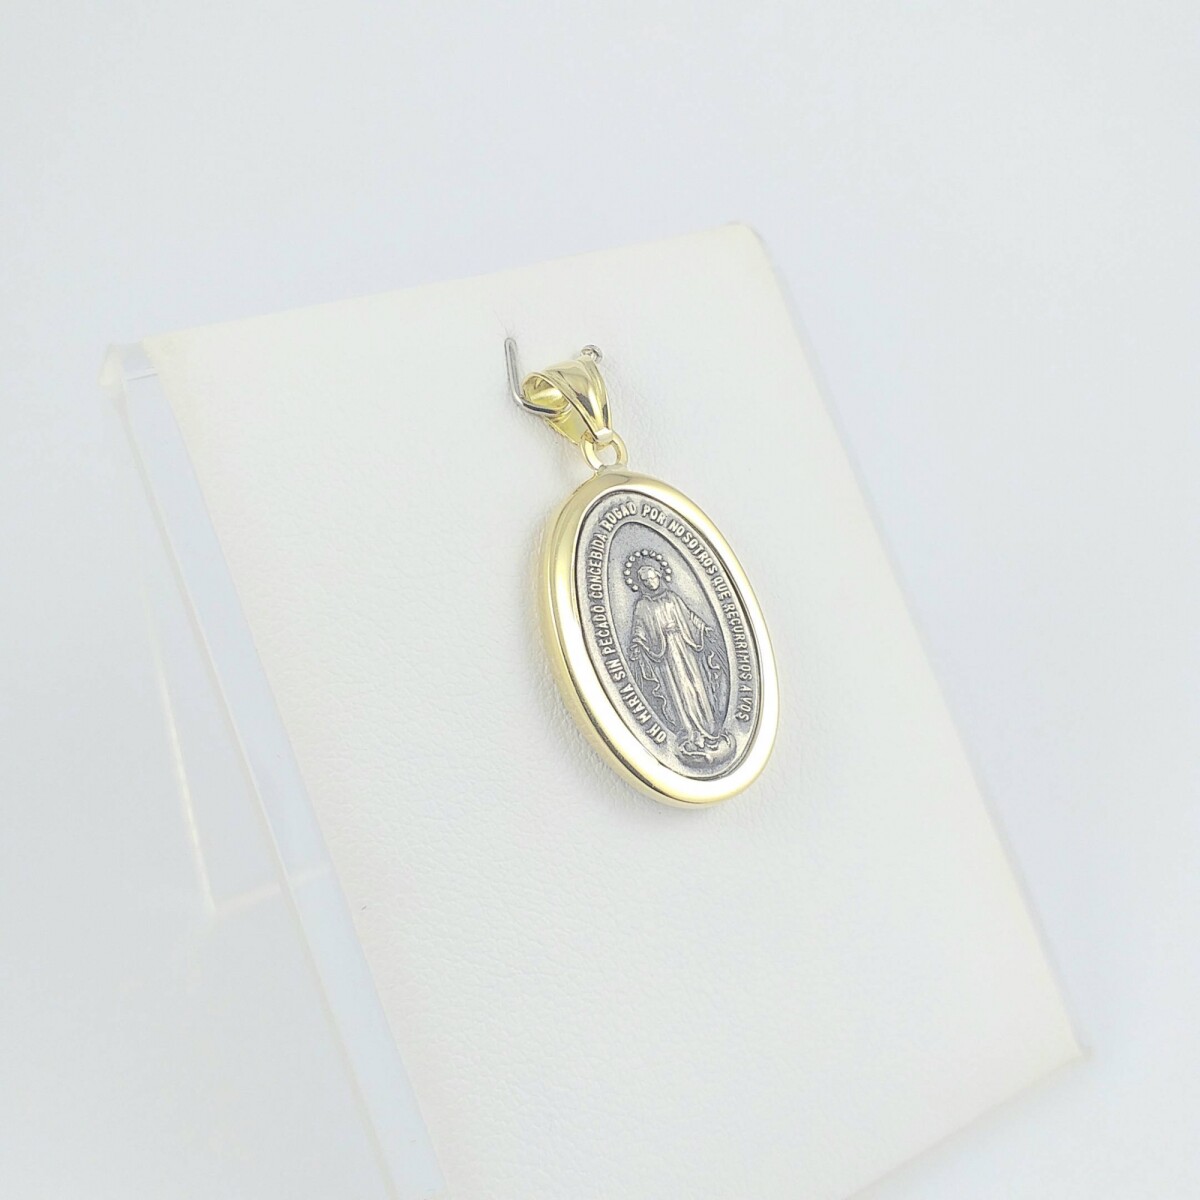 Medalla religiosa de plata 925 y oro 18Ktes, Virgen Milagrosa, medidas alto 22mm, ancho 15mm. 